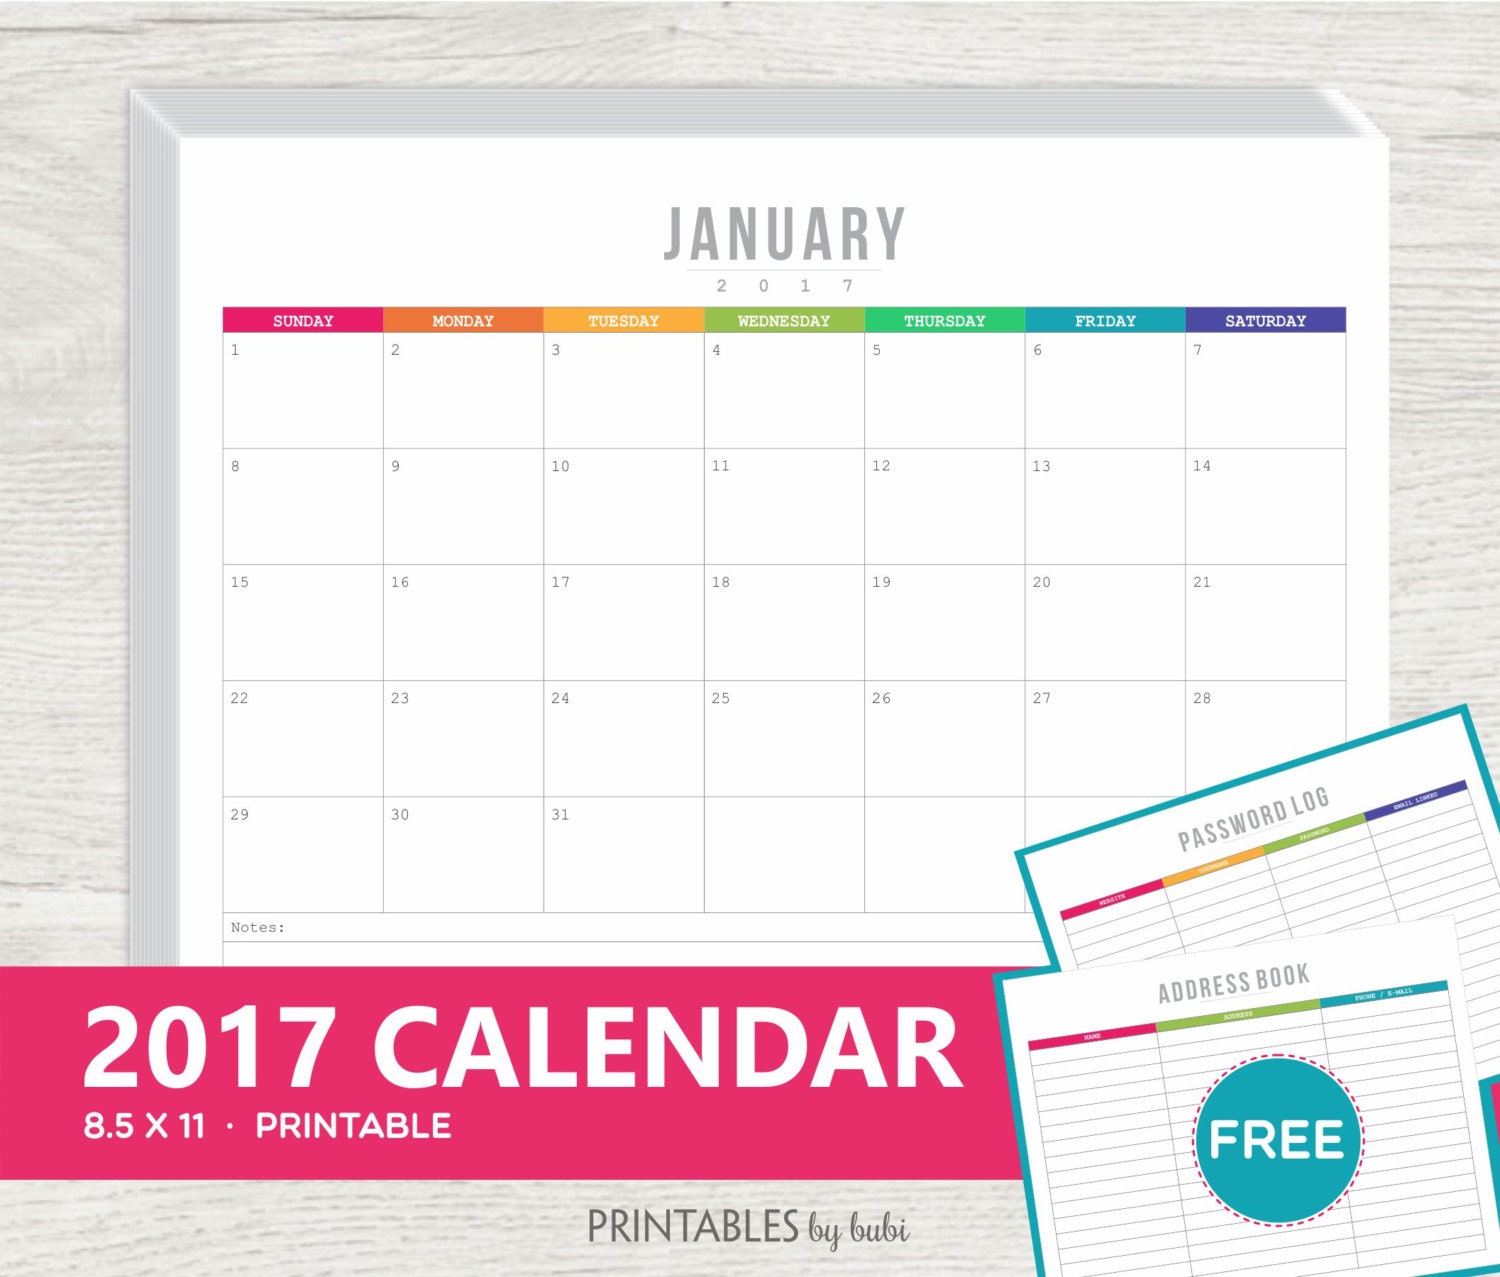 2017 Calendar Printable Calendar Address Book by cardsbybubi